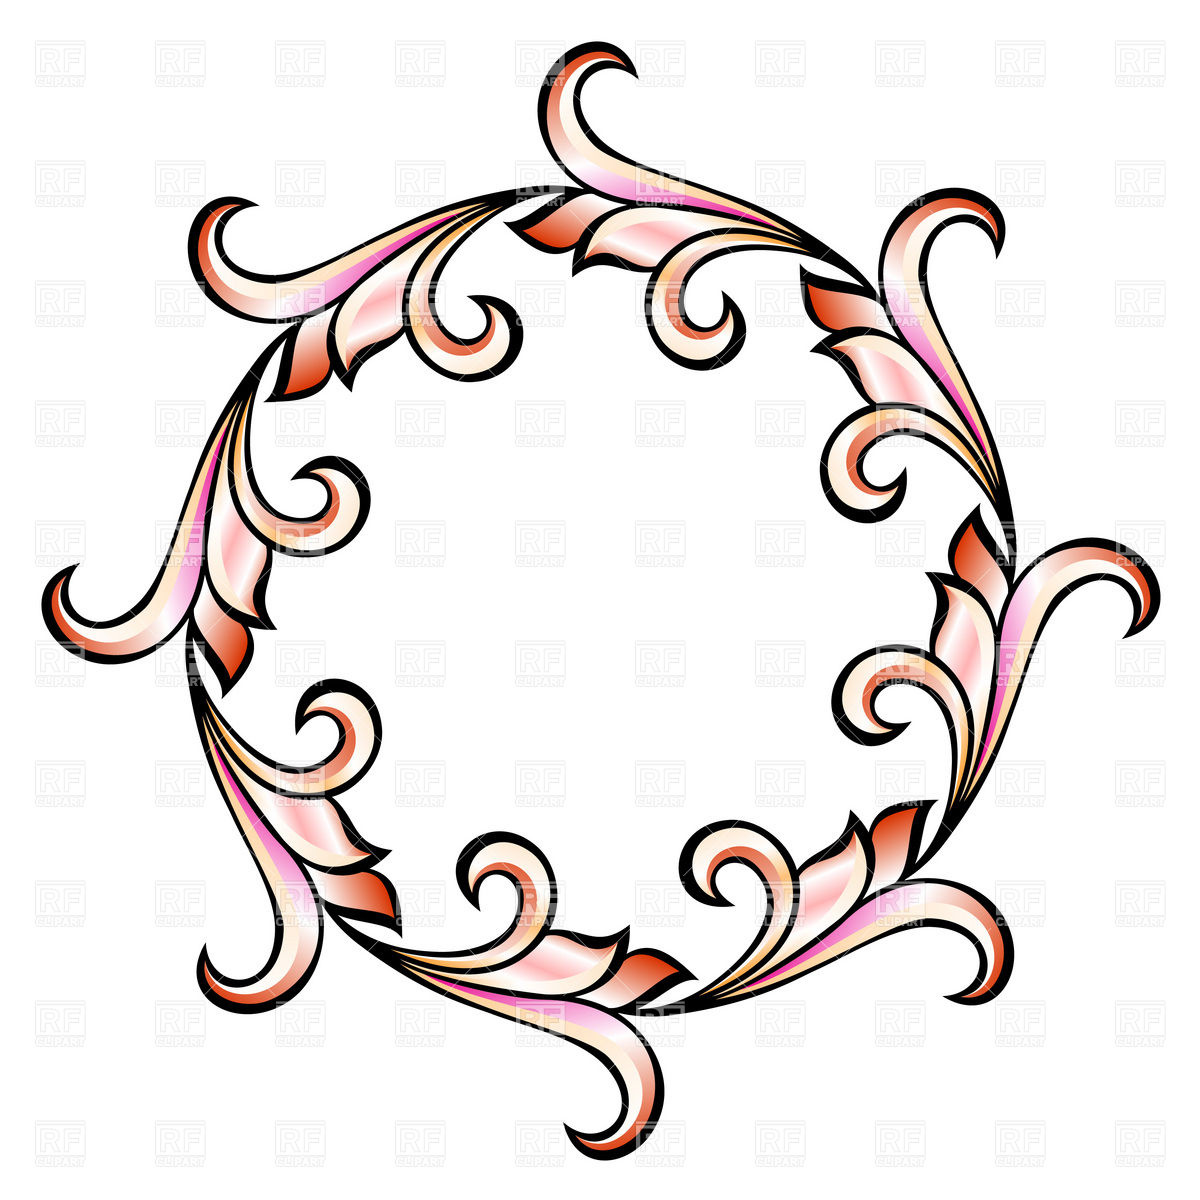 Decorative Round Frame With Curls 8511 Design Elements Download